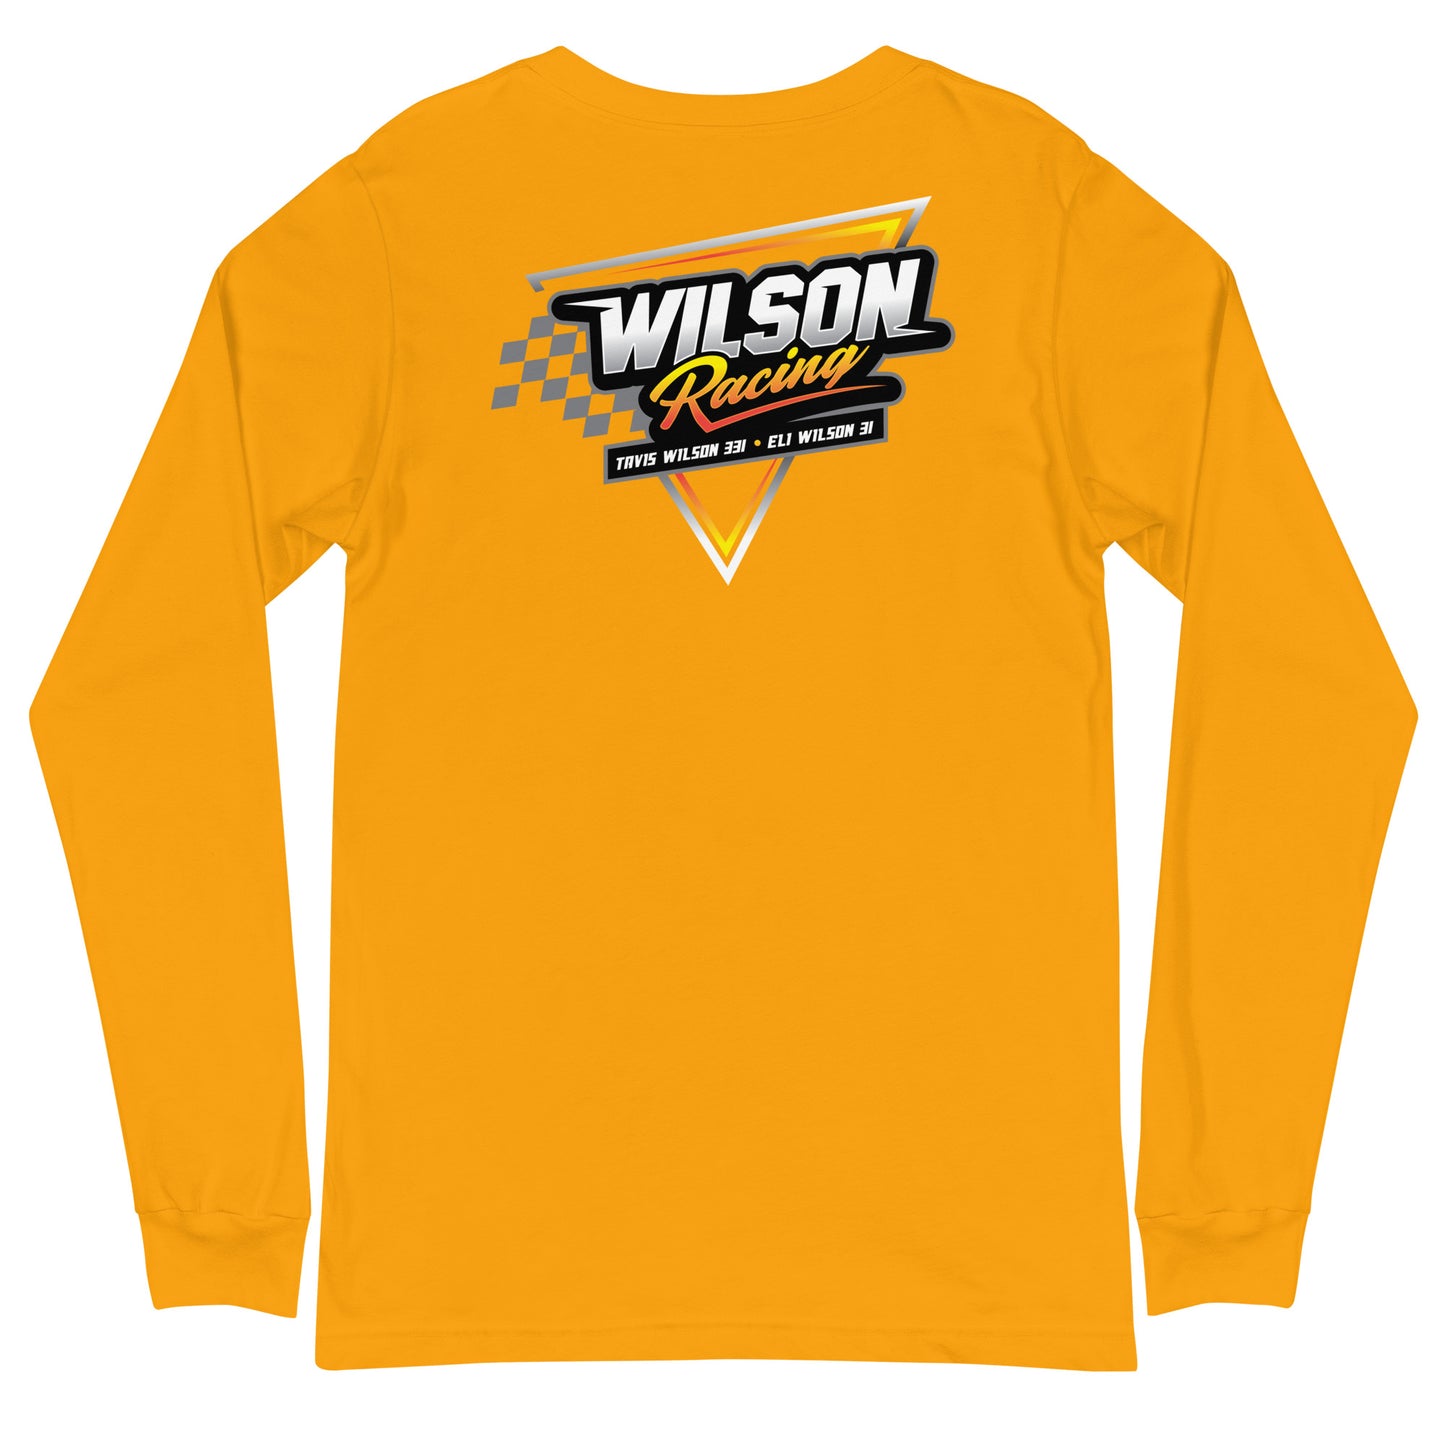 Wilson Racing Long Sleeve Tee